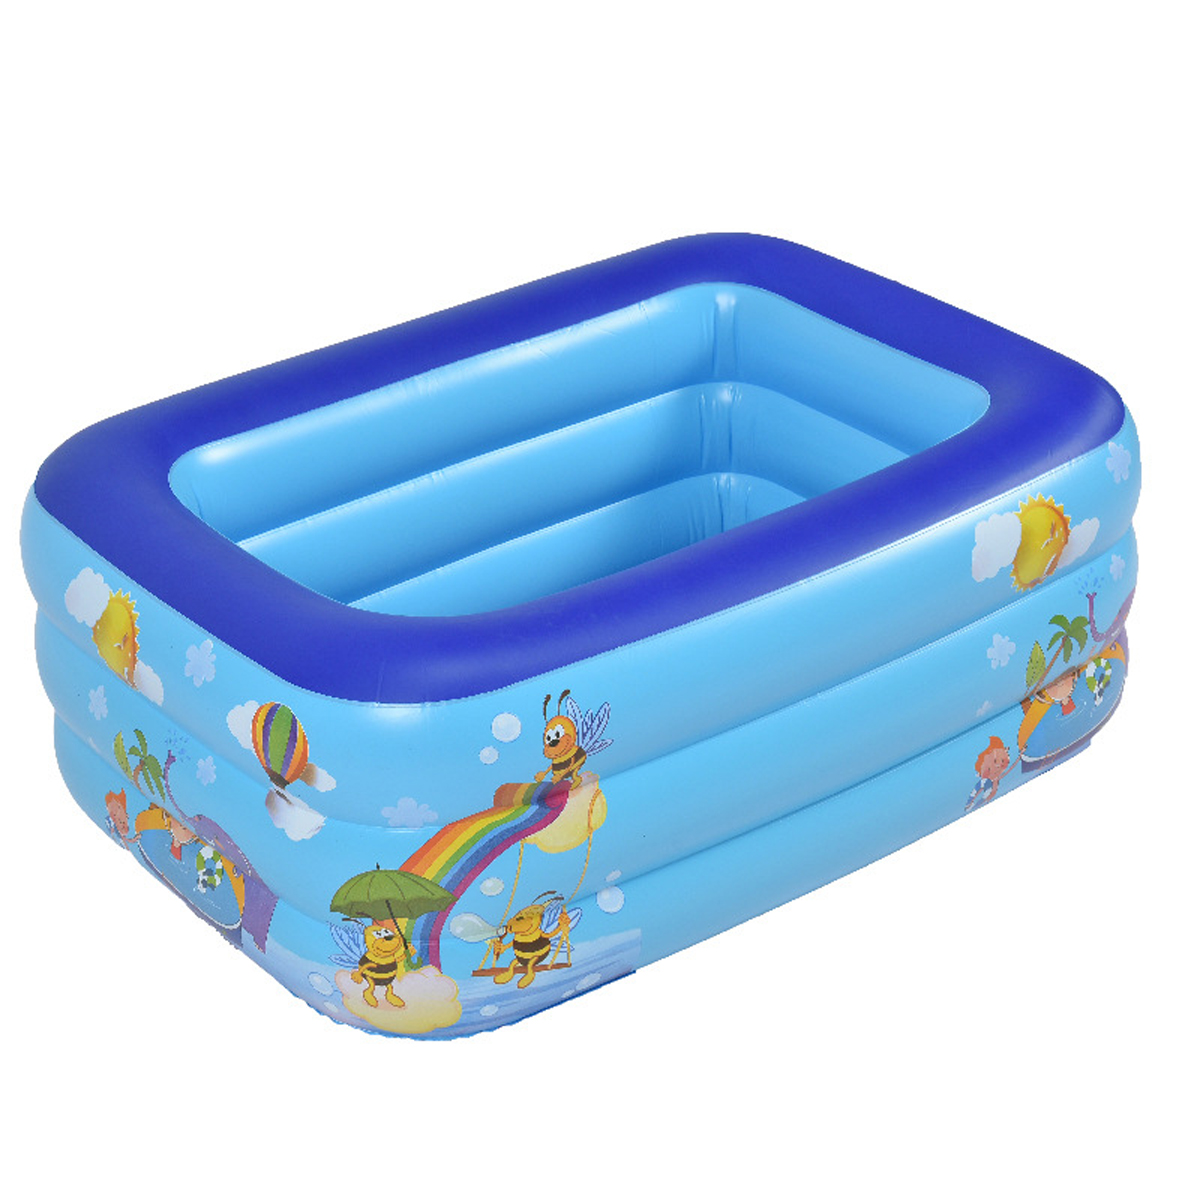 120130150180210cm-Kids-Inflatable-Swimming-Pool-Indoor-Home-For-Children-Swim-1674805-10